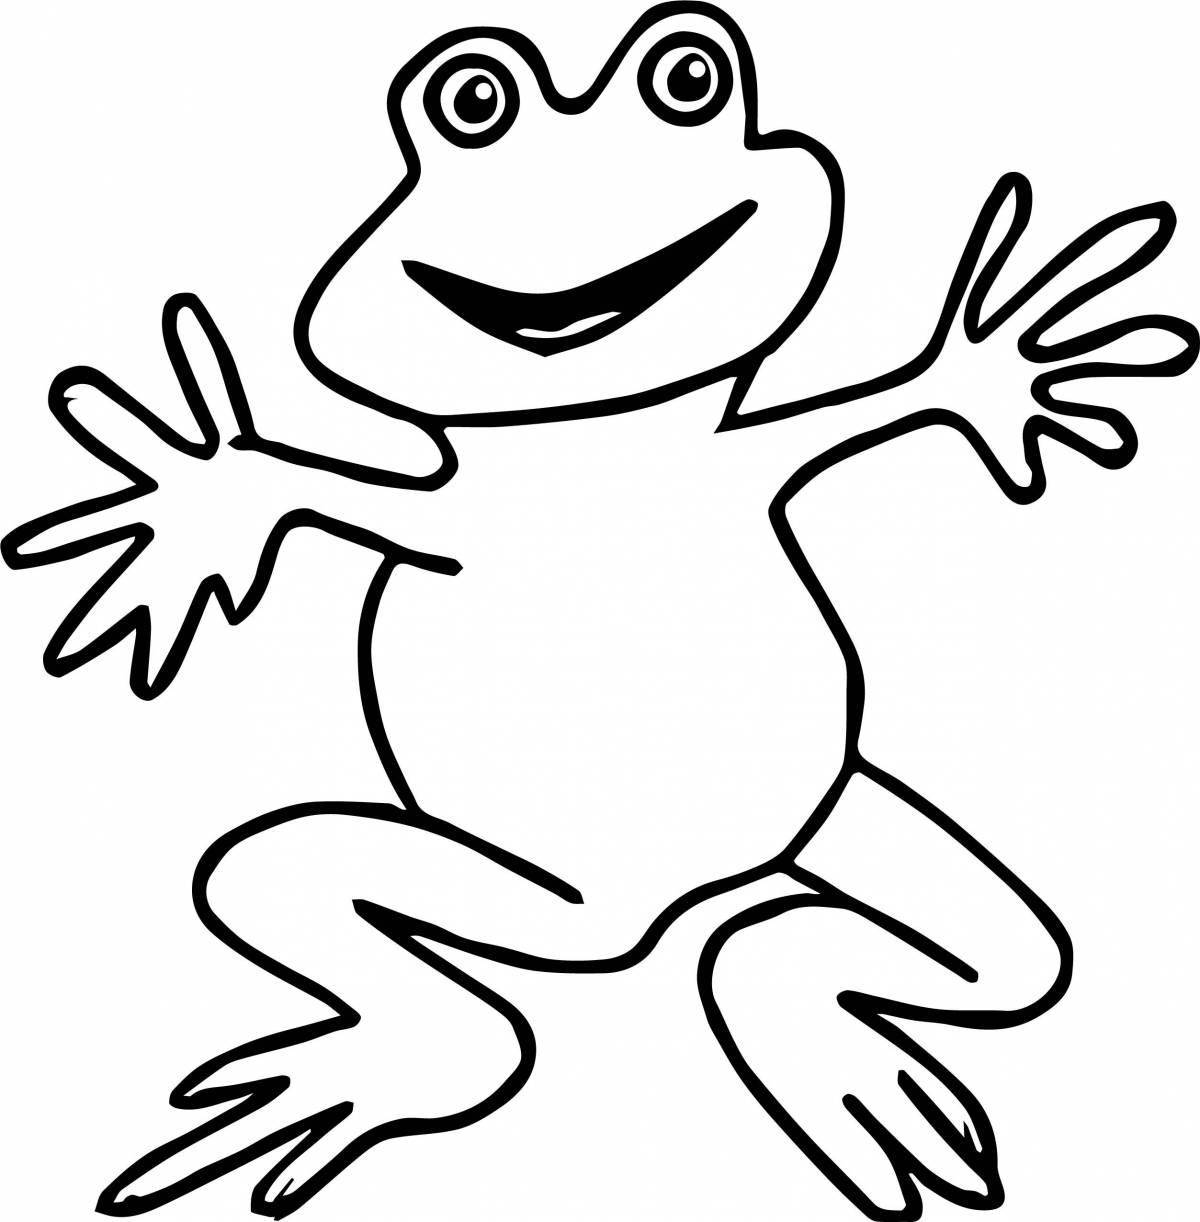 Coloring book playful frog traveler